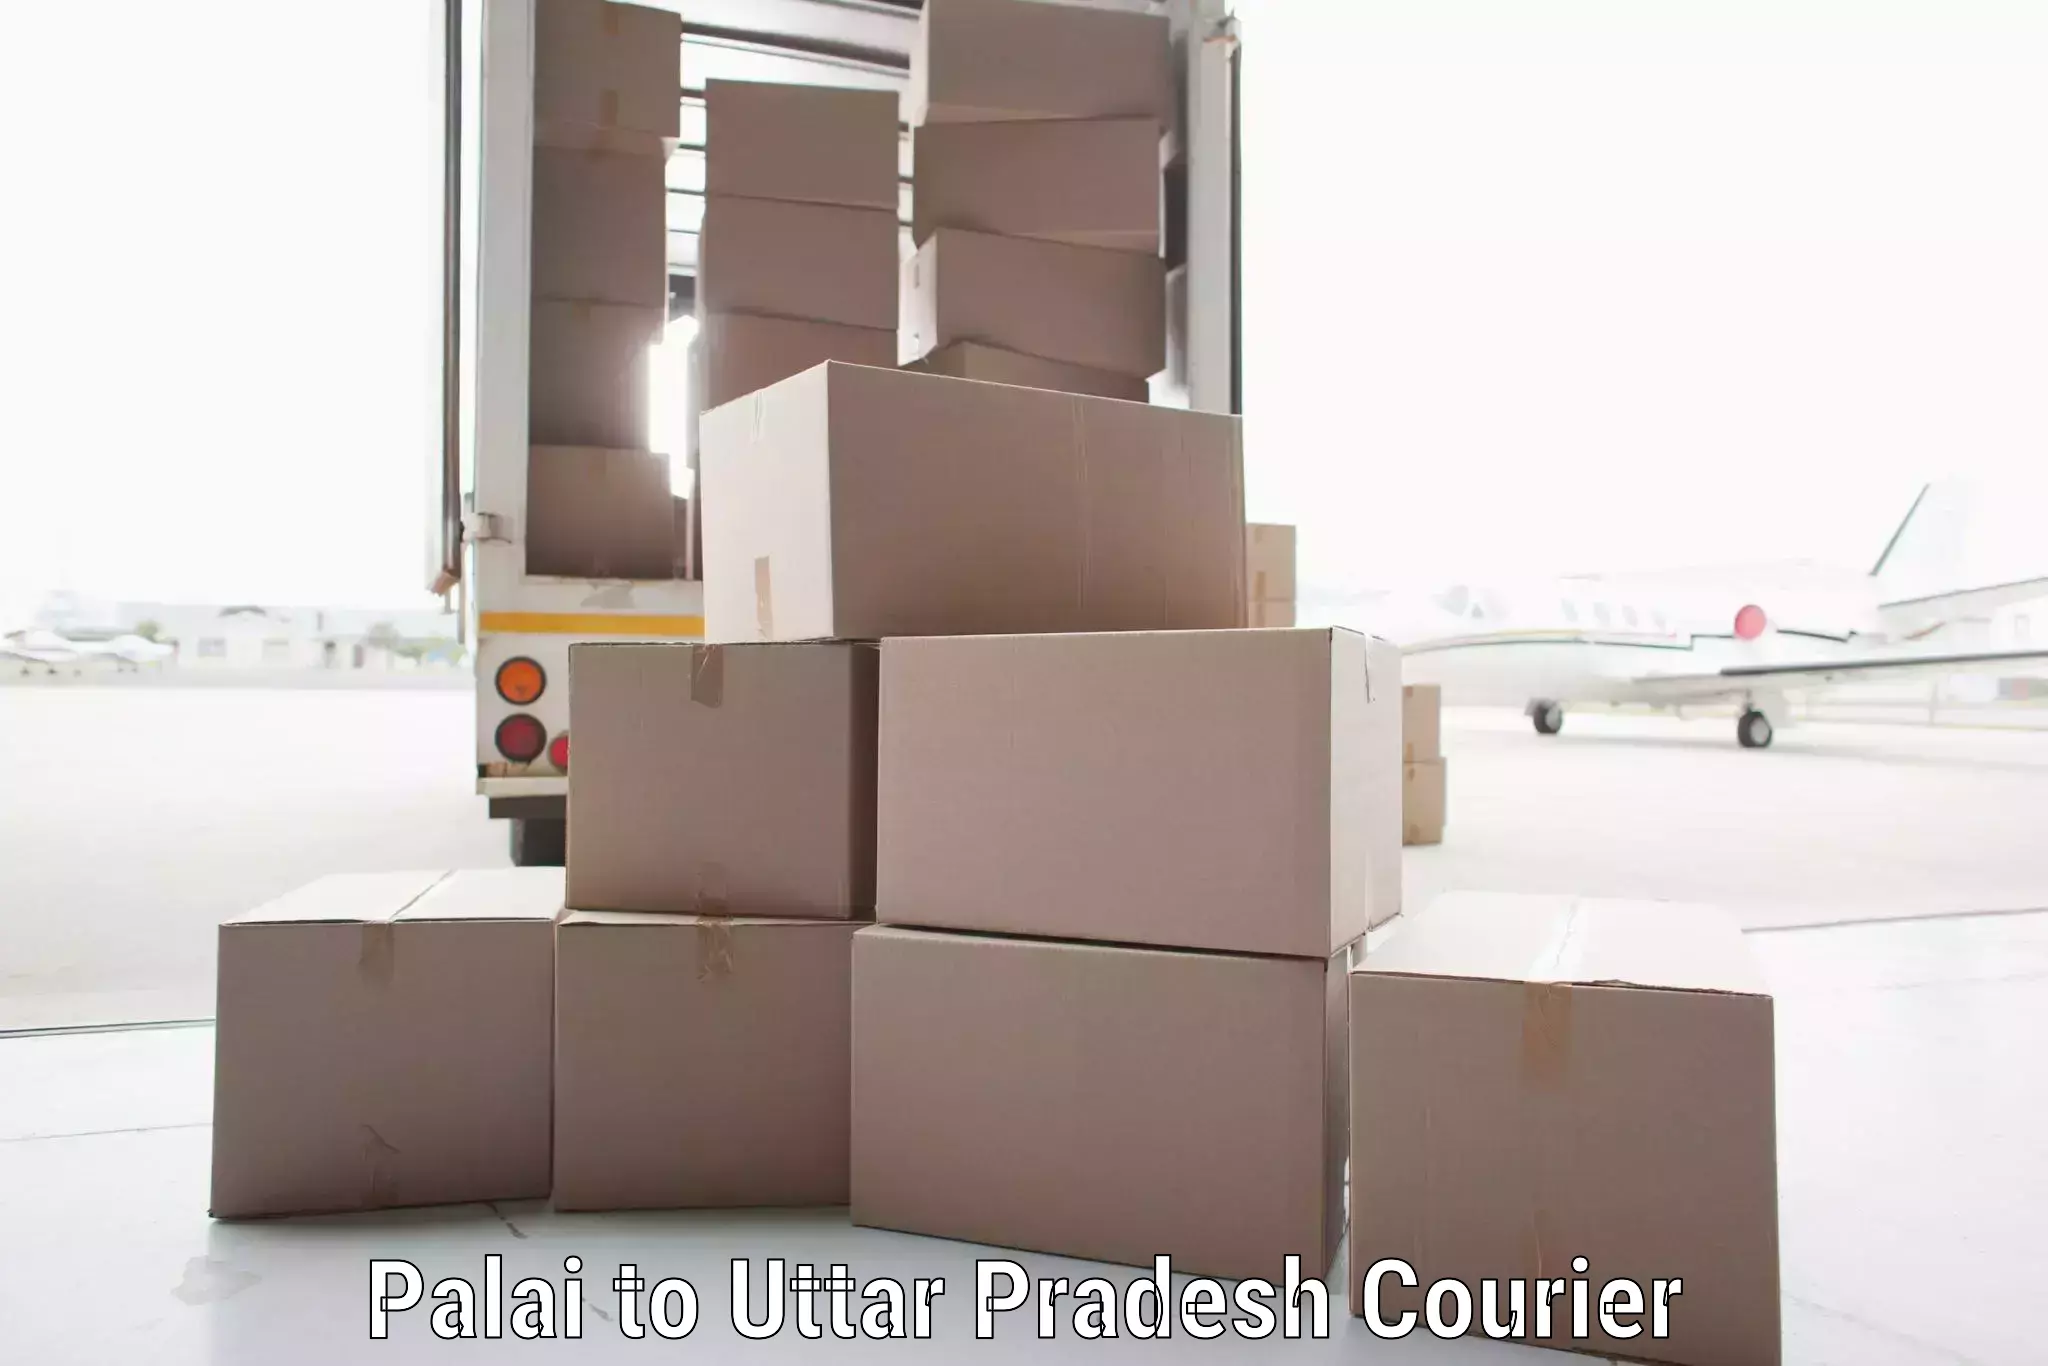 Seamless shipping experience Palai to Orai